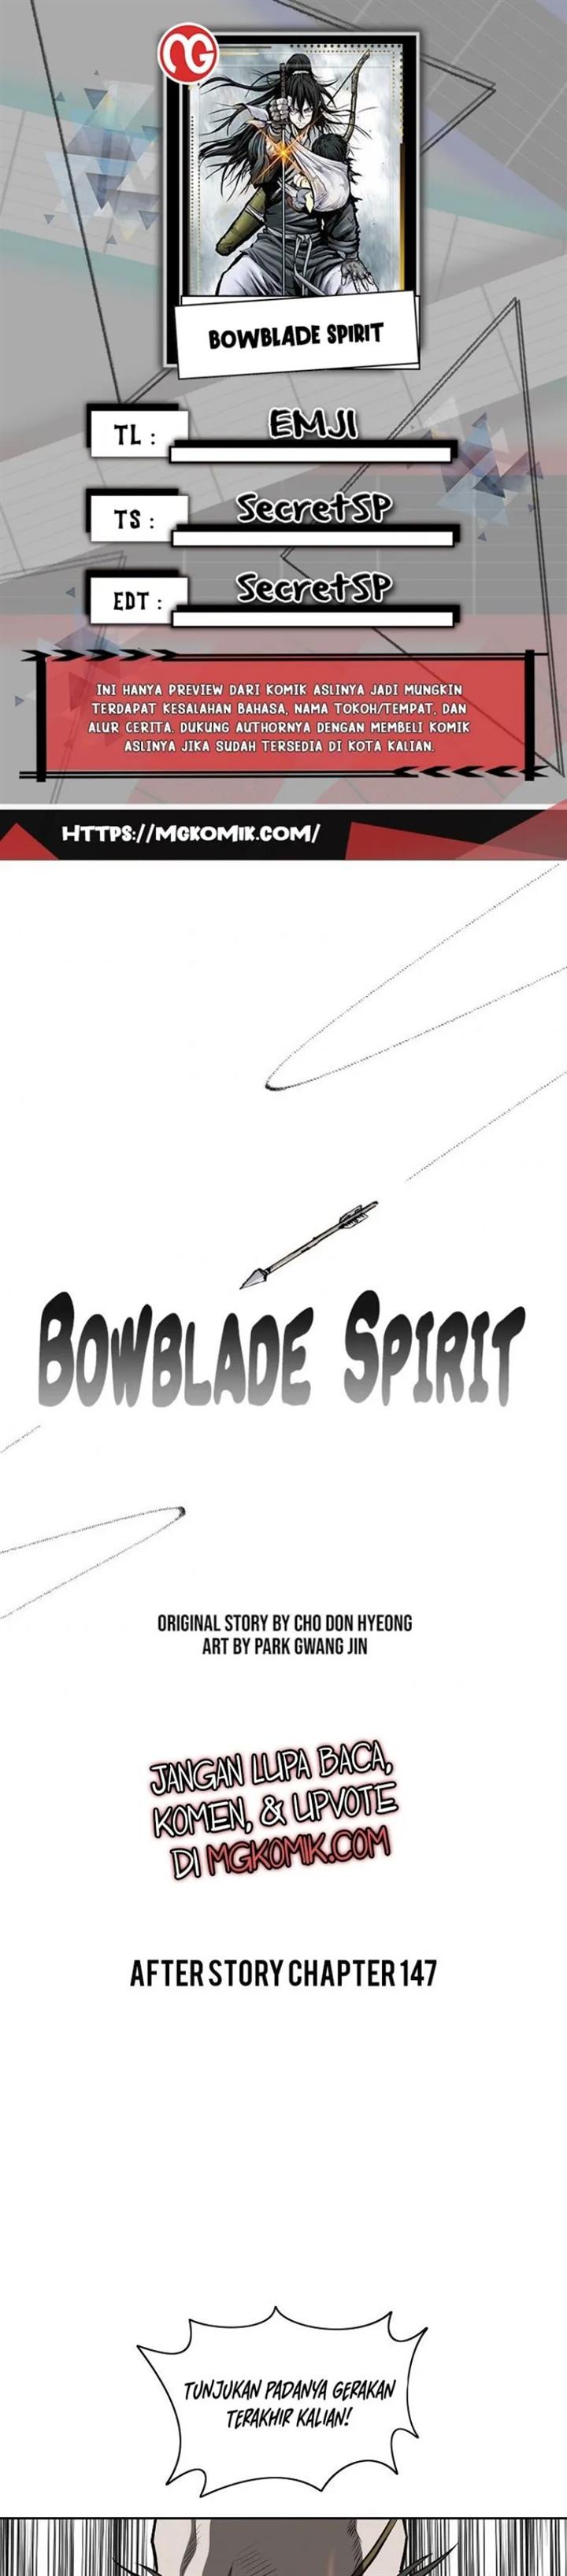 Bowblade Spirit Chapter 147 End